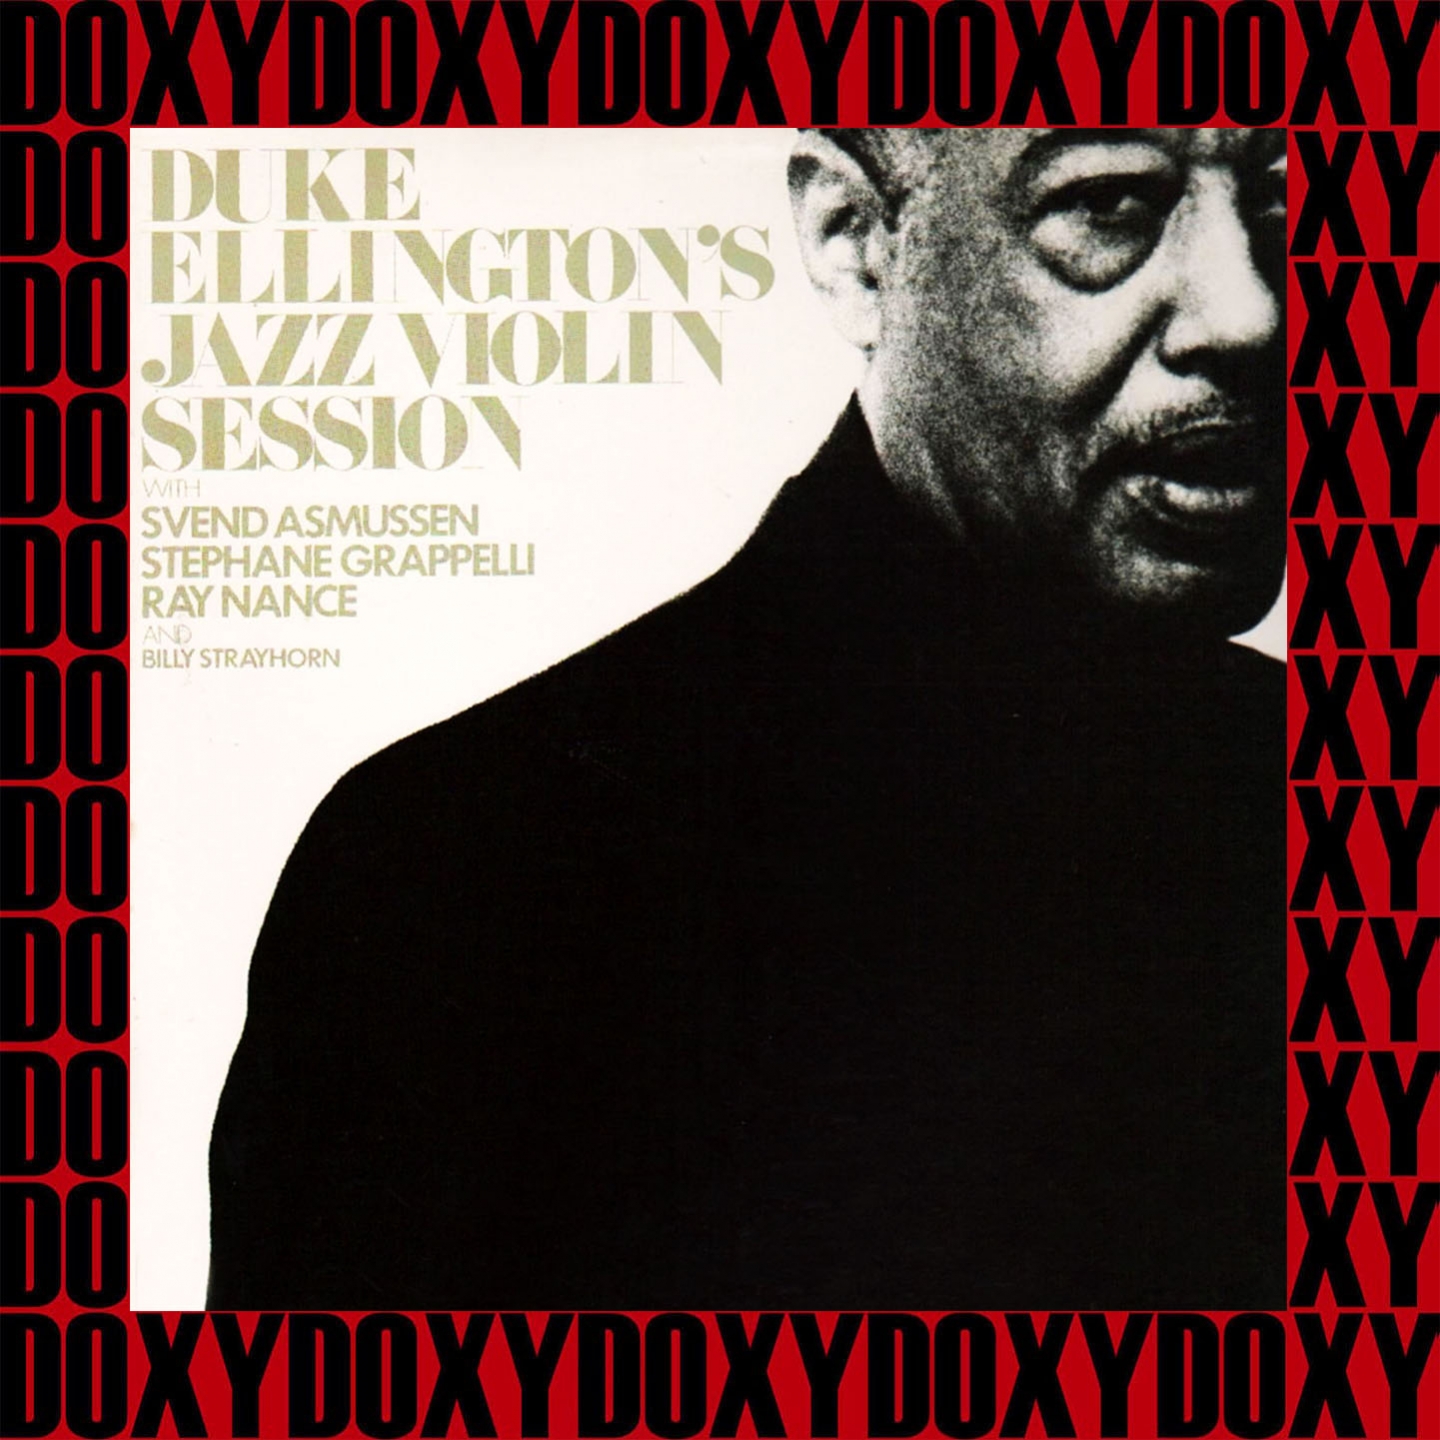 Duke Ellington's Jazz Violin Session (Remastered Version) (Doxy Collection)